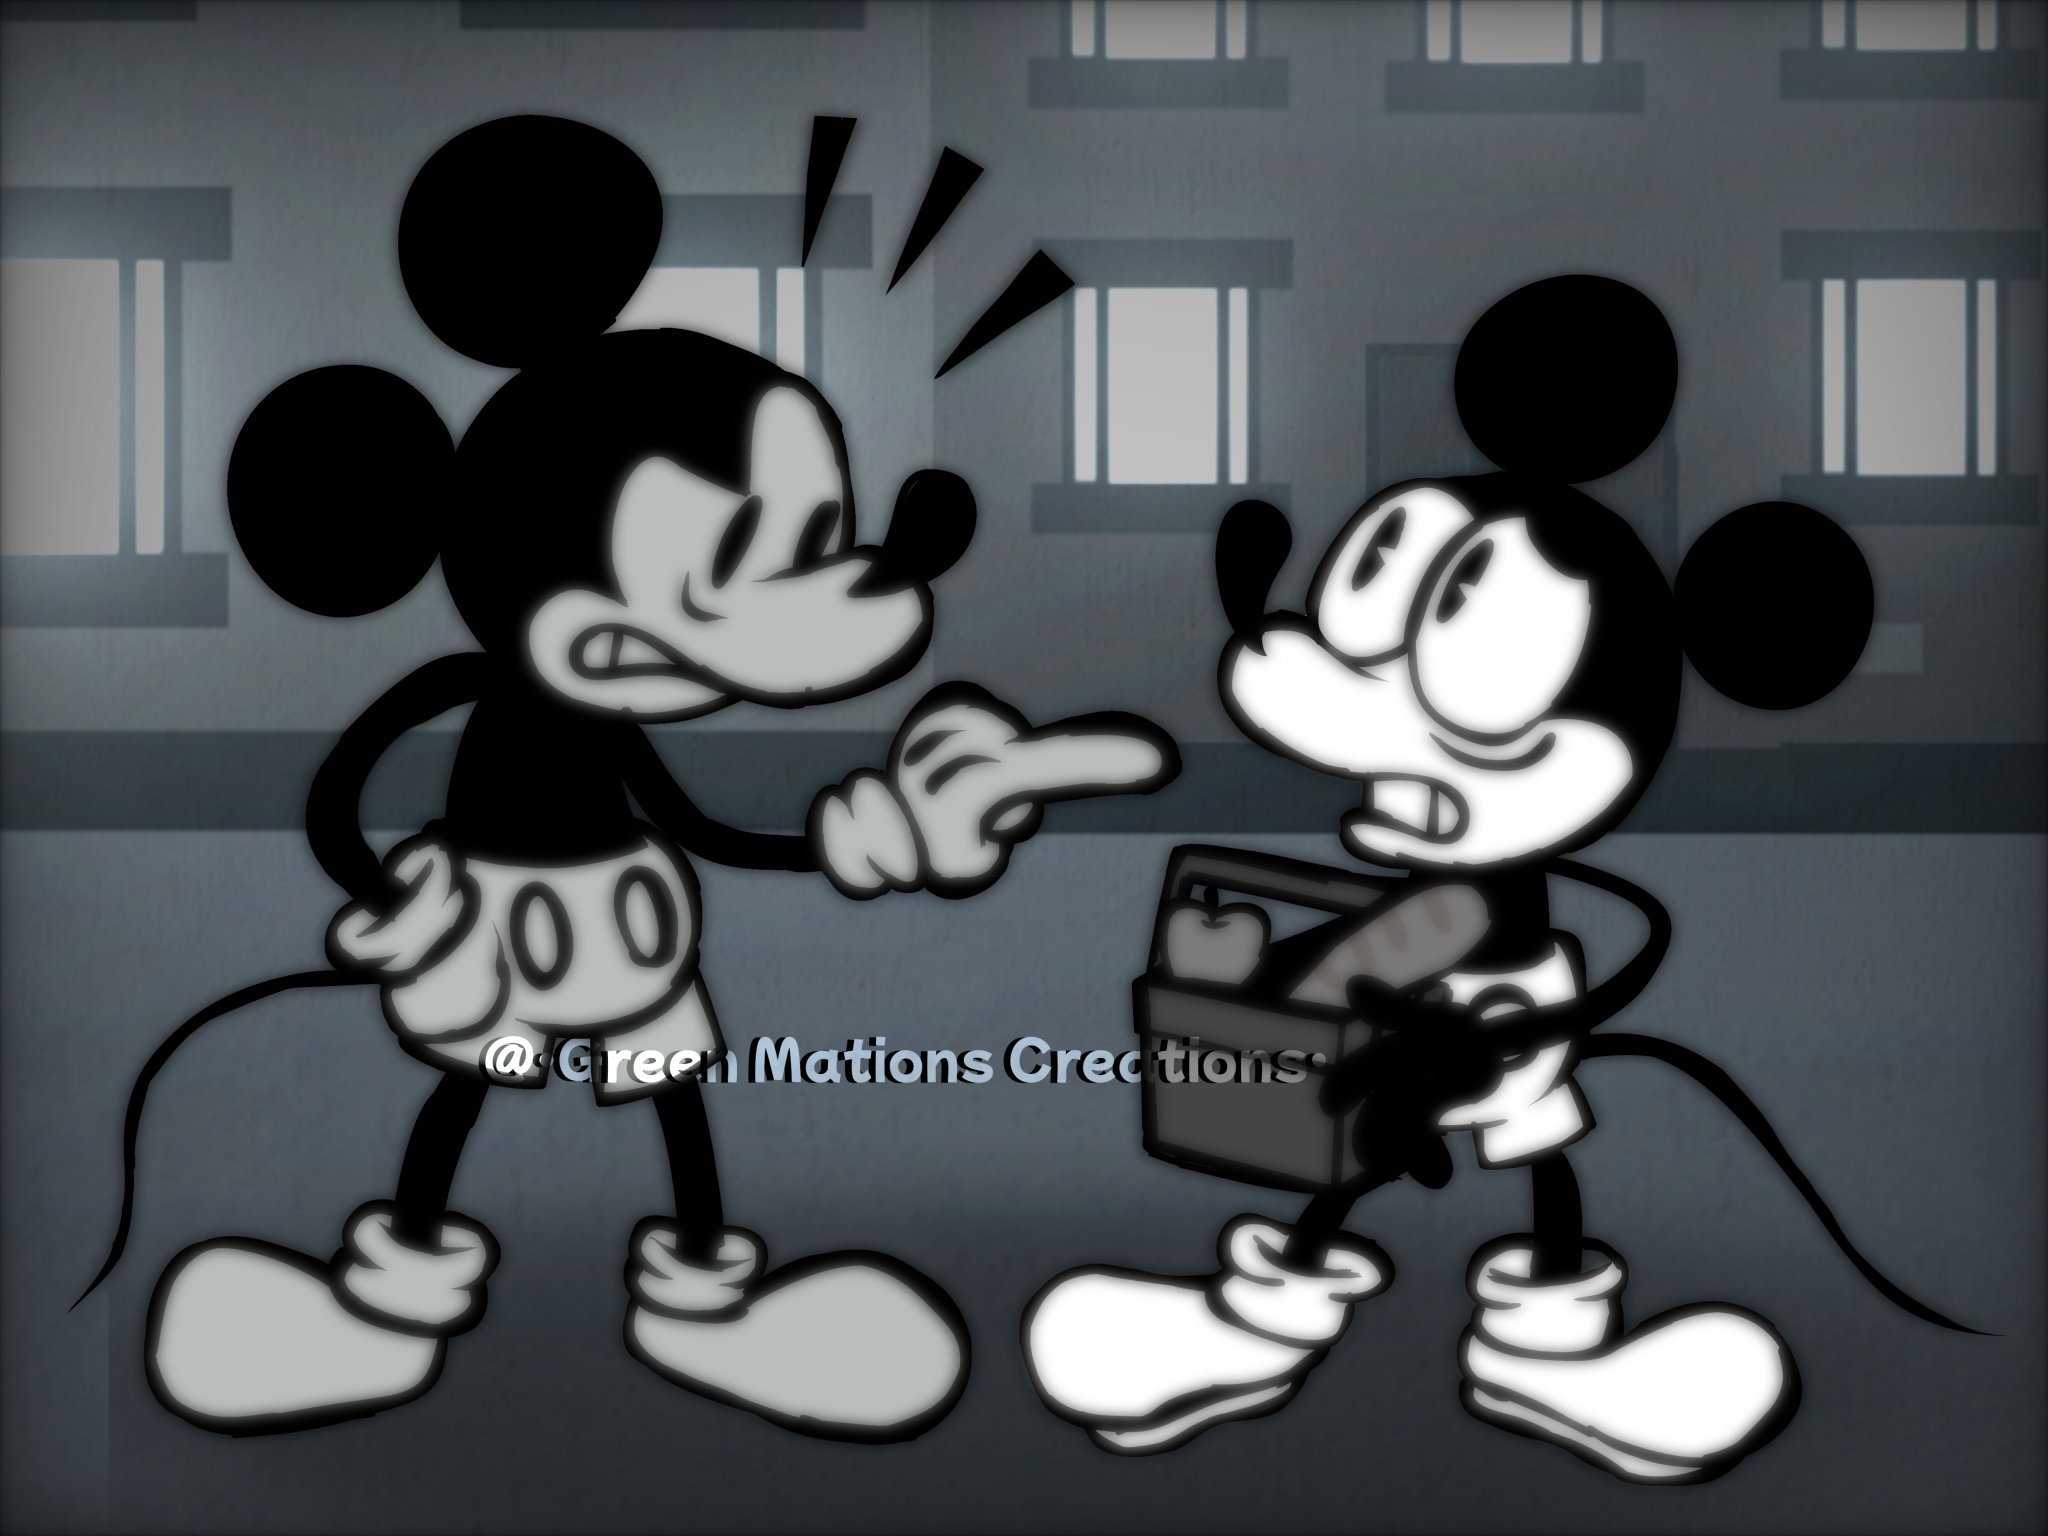 Green Mations Creations • X પર: Mr Beast rap battle meme but it's Mickey.  Lmao #FNF #MickeyMouse #Disney #Rubberhose #WednesdaysInfidelity #VSMouse  #SundayNightSuicide #SuicideMouse #Art #Cartoon #1930cartoons #MrBeast  #MrBeastMeme #IbisPaintX https